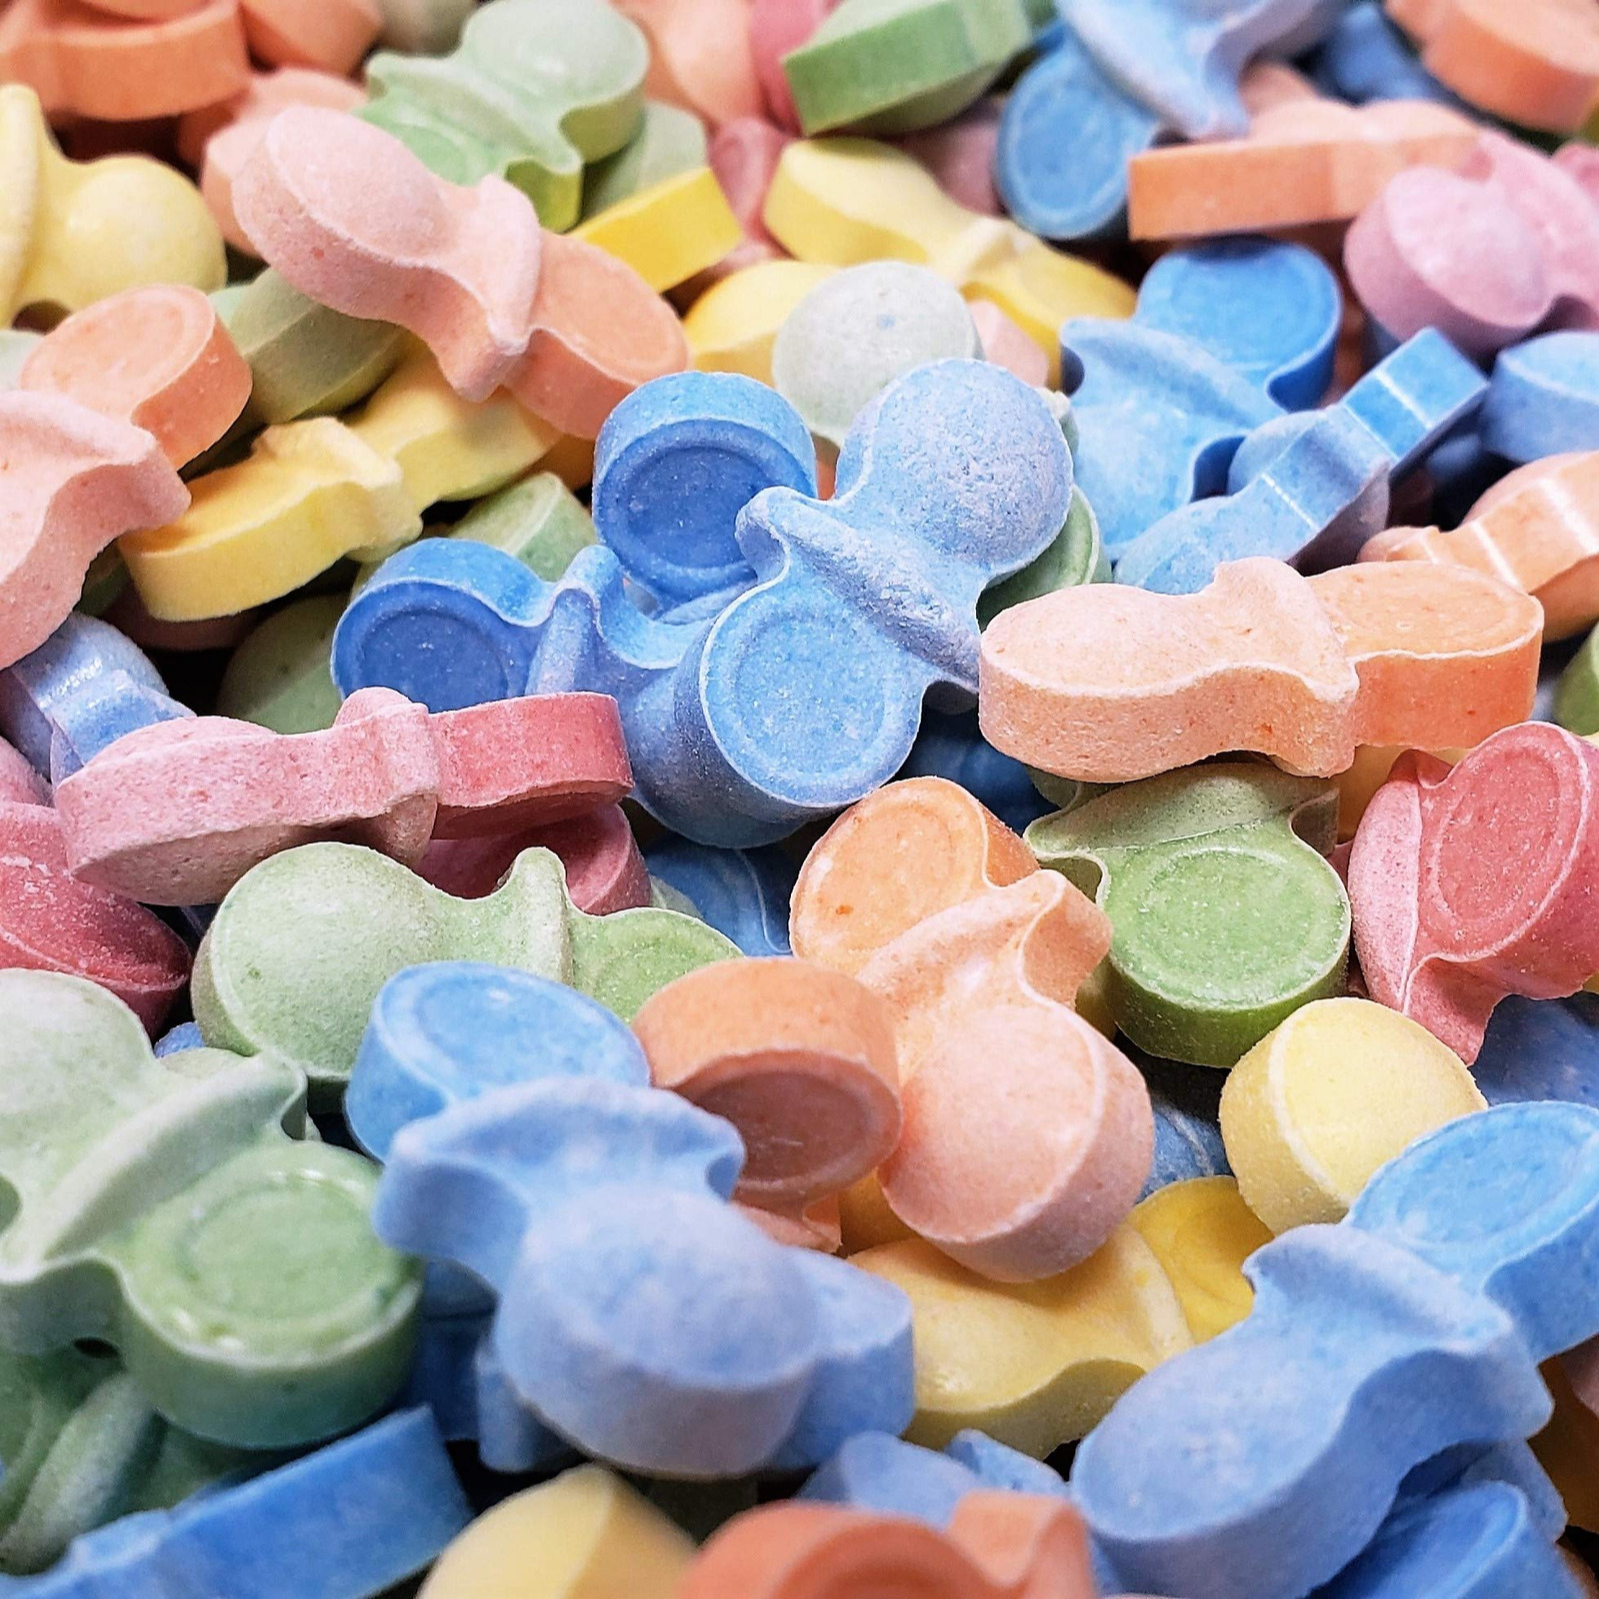 Mini M&M's® 1 lb. - True Confections Candy Store & More